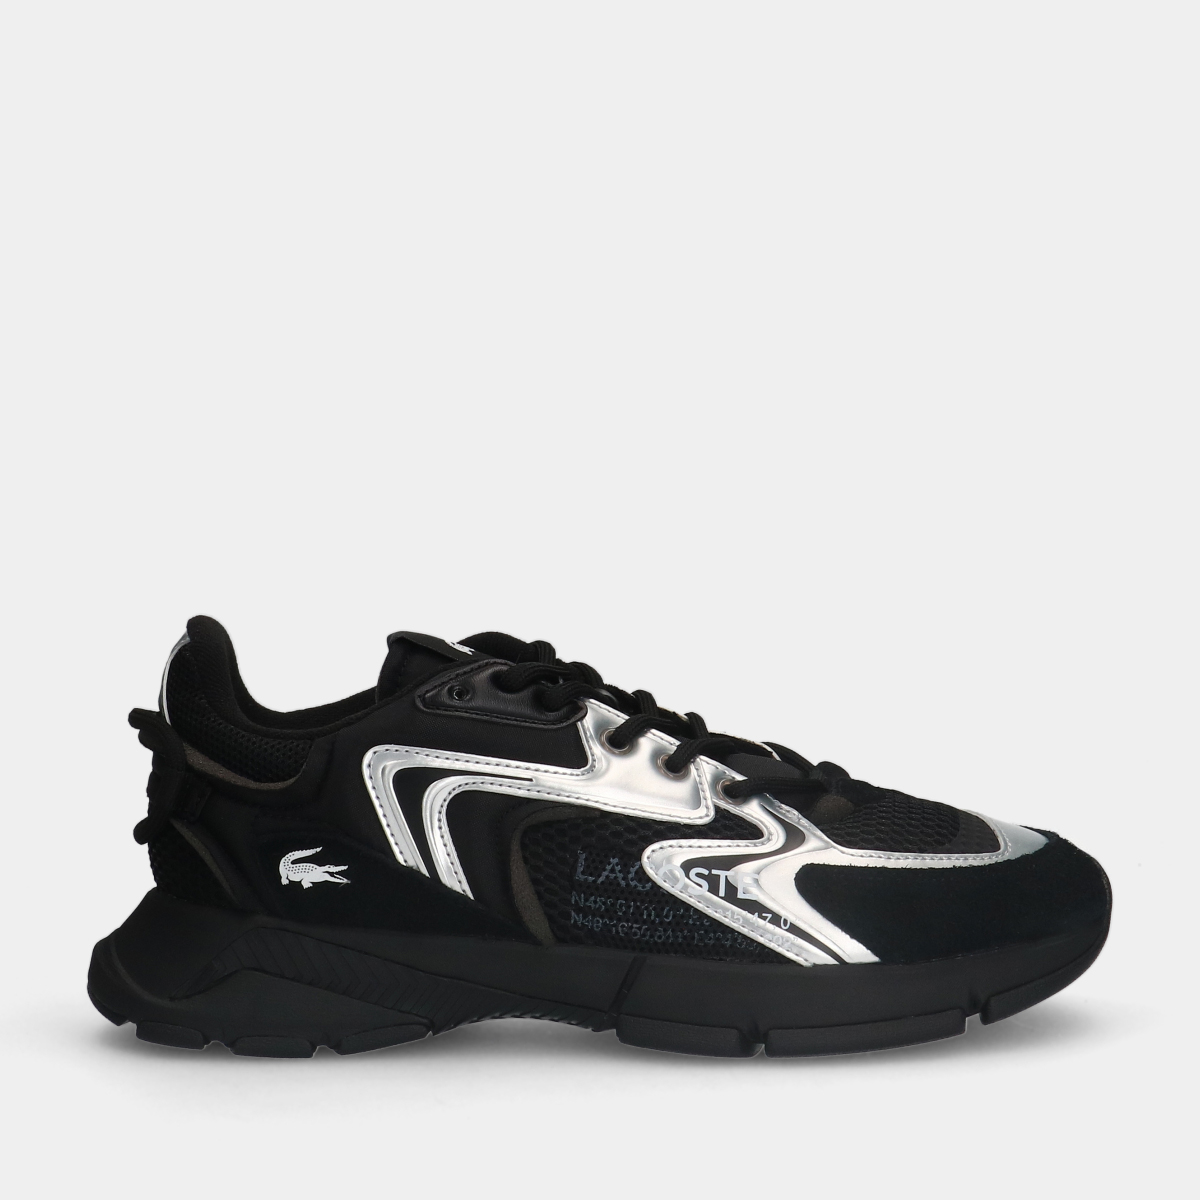 Lacoste L003 NEO Black/ White heren sneakers

